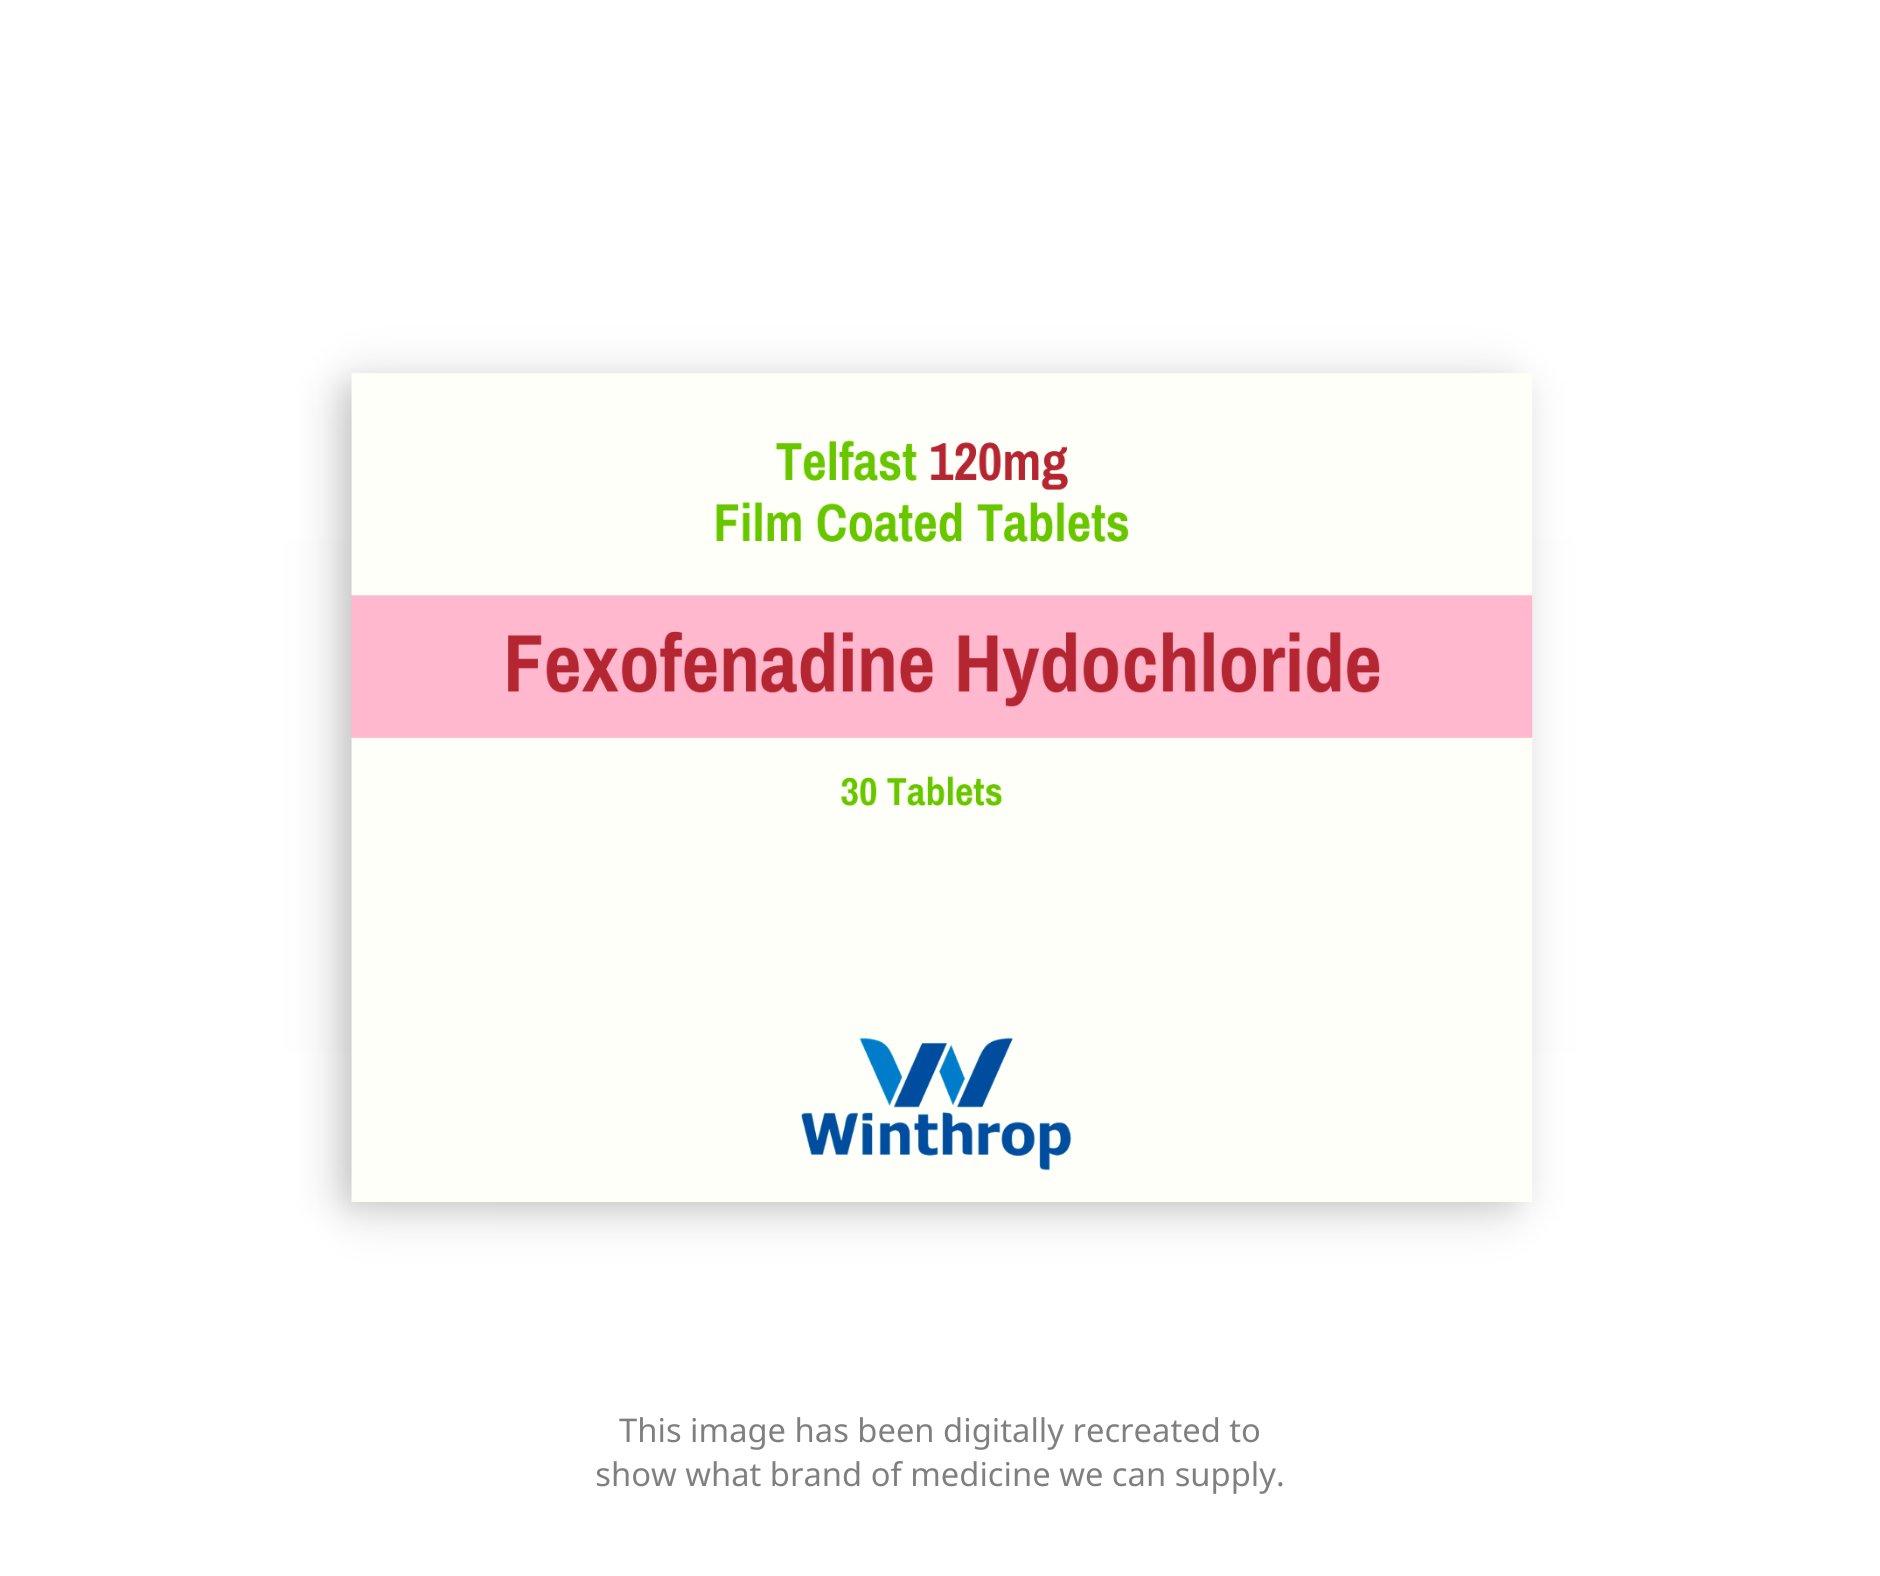 Fexofenadine Hydrochloride example packaging